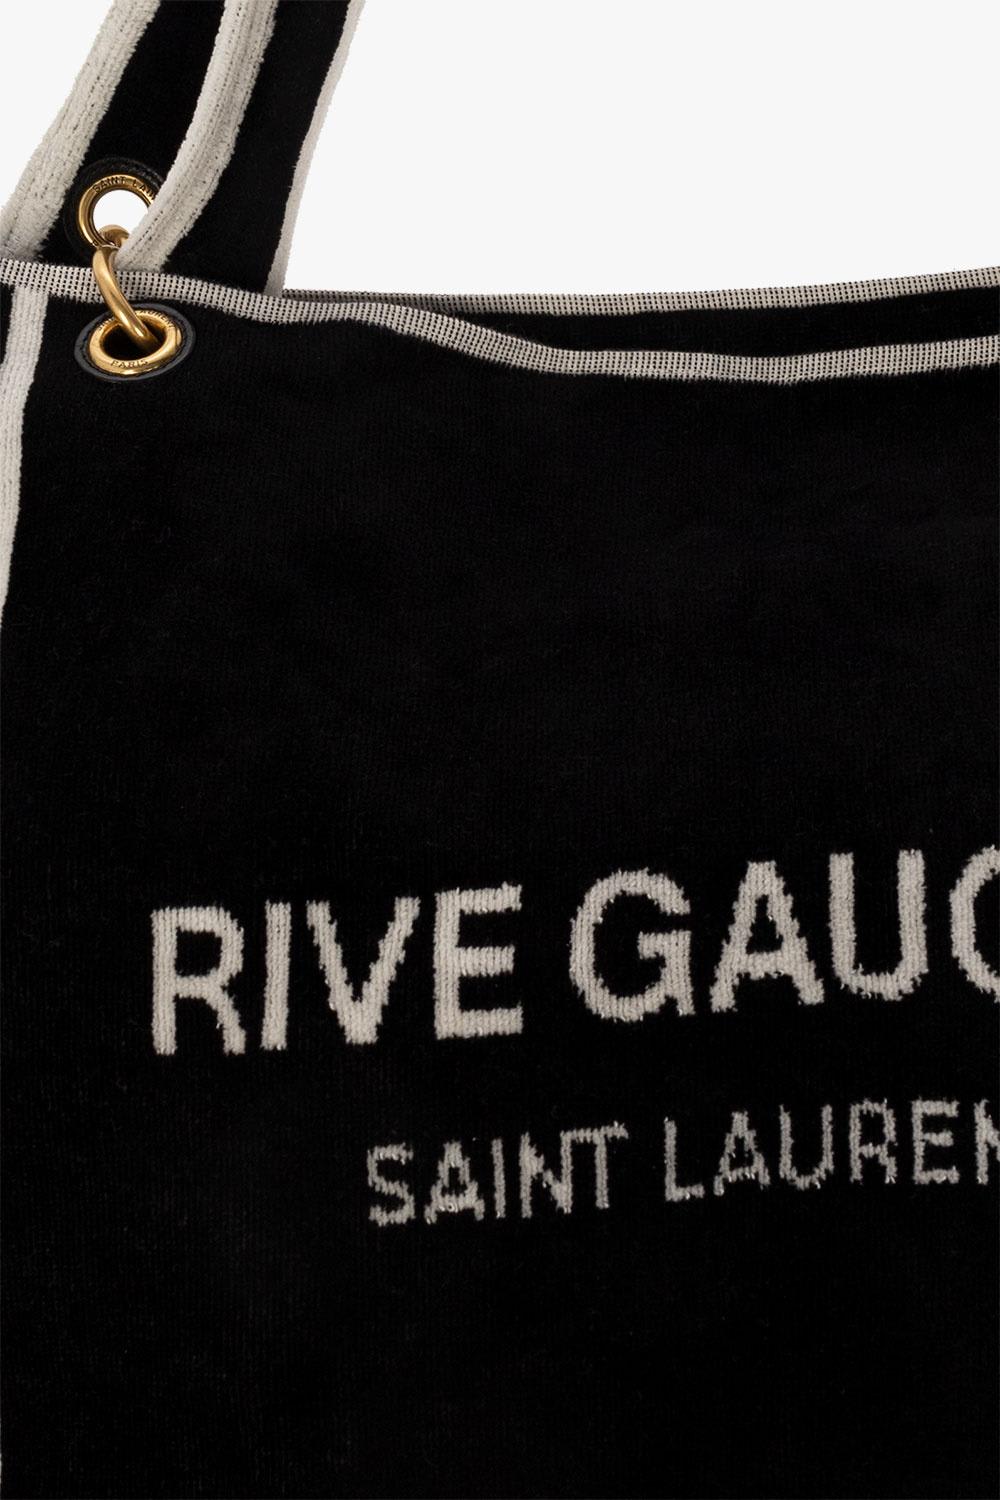 Saint Laurent rive gauche towel tote bag in terry cloth black-Via Manzoni